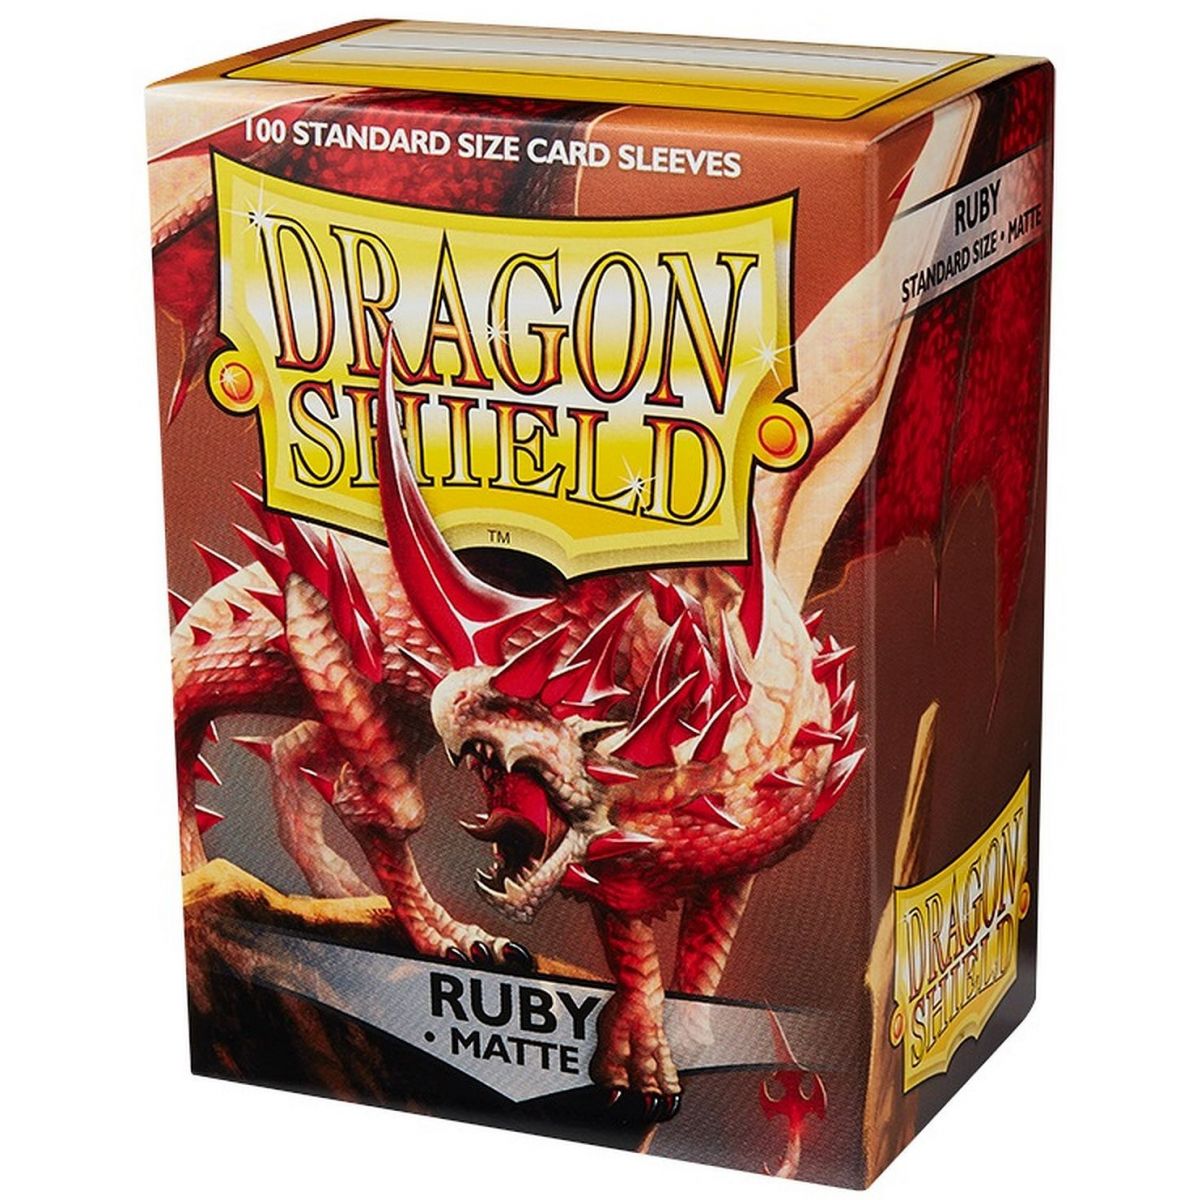 Item Dragon Shield - Standard Sleeves - Matte Ruby (100)